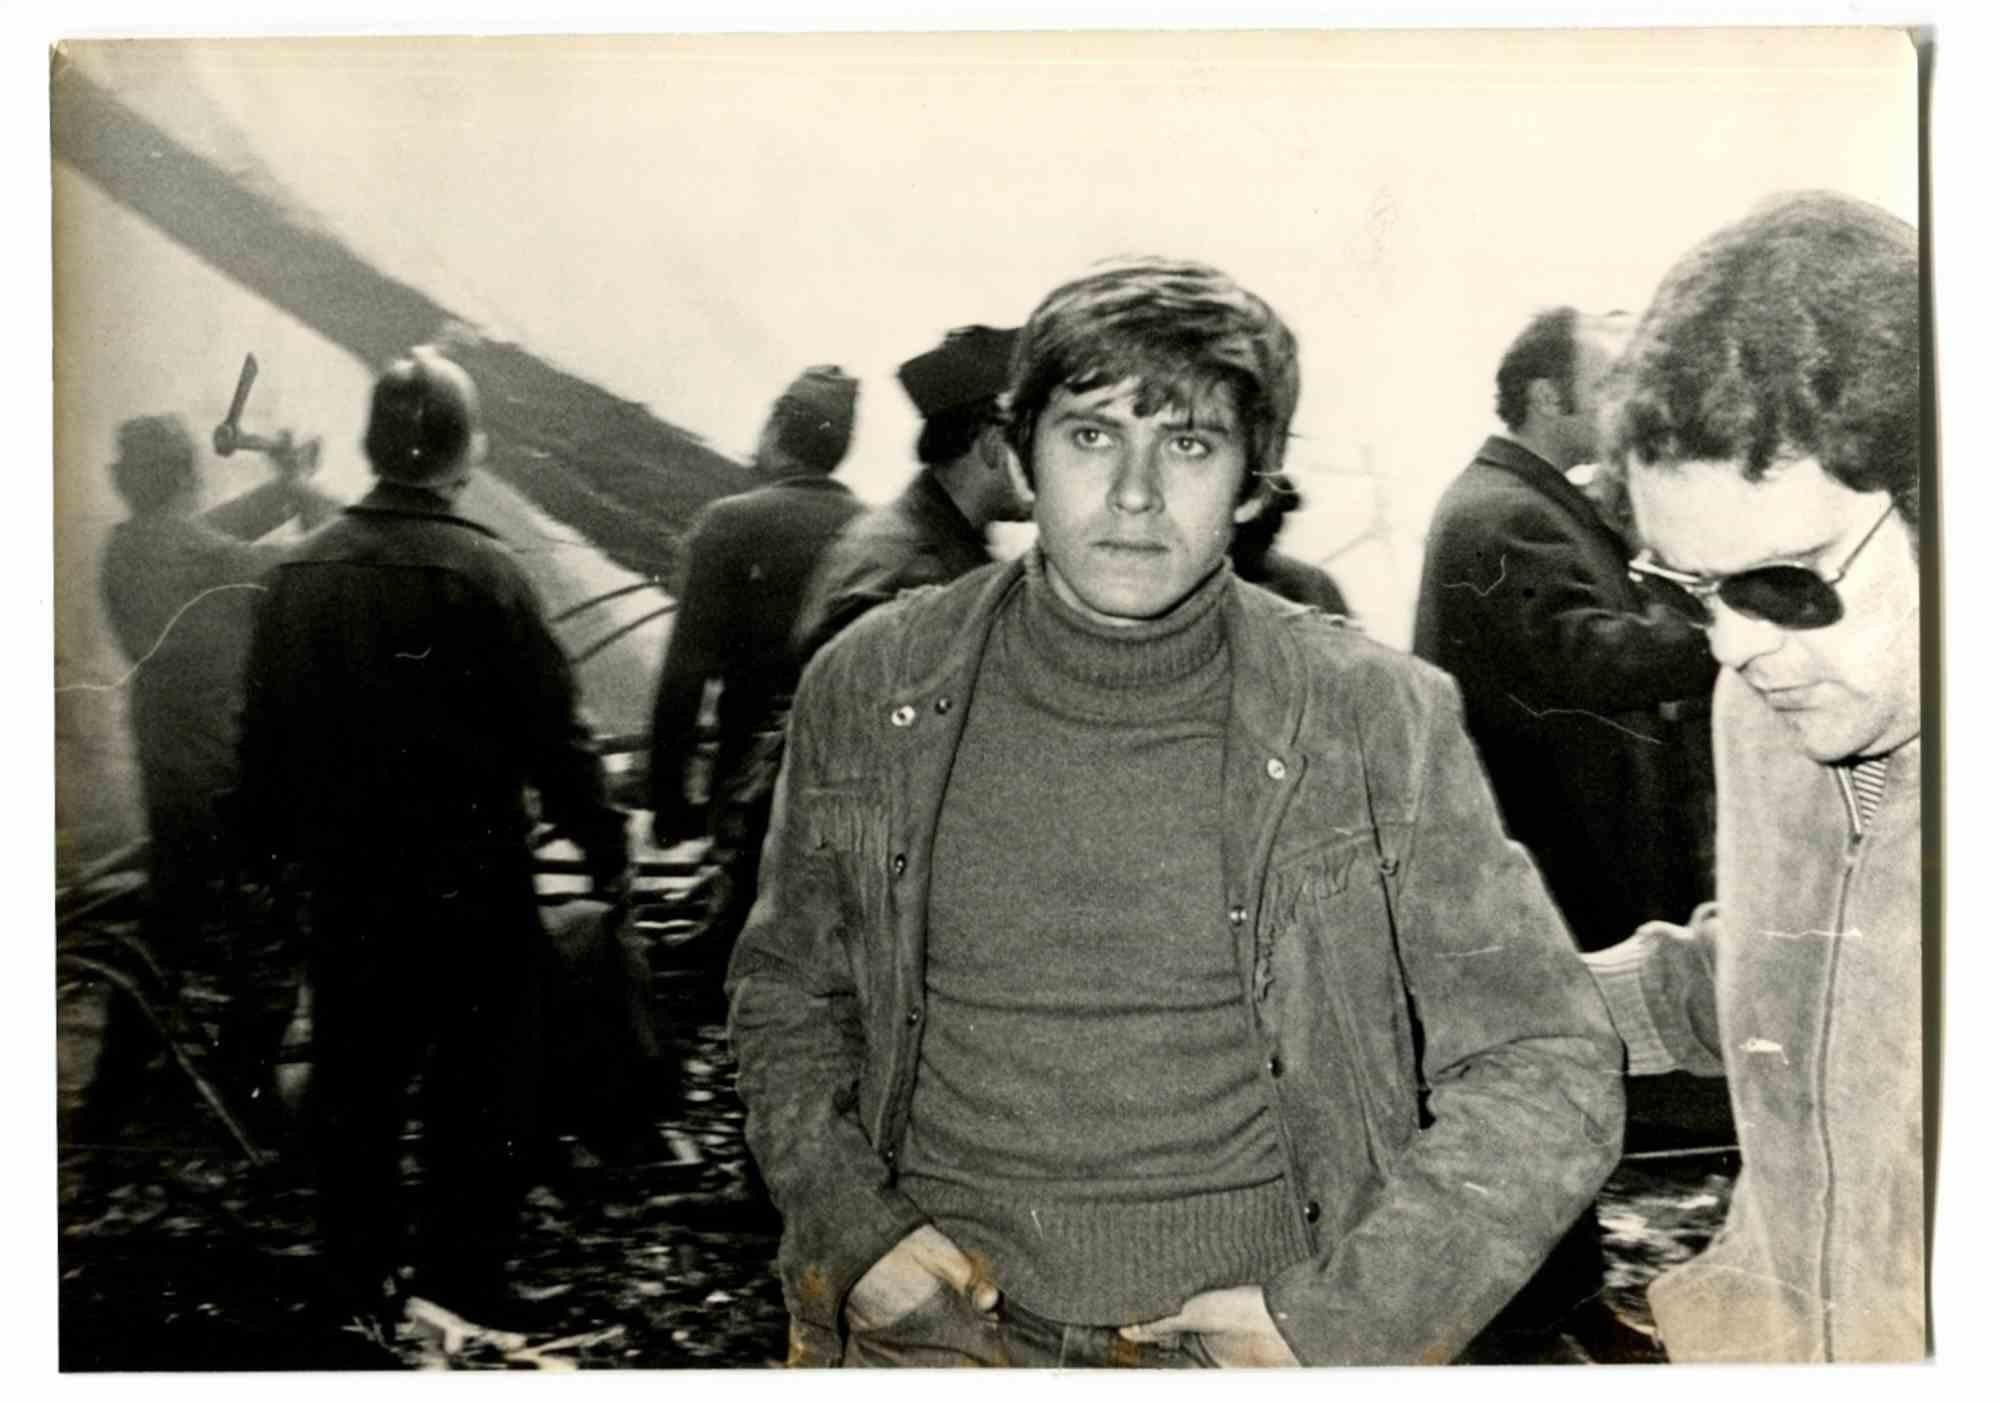 Unknown Portrait Photograph - Gianni Morandi - Vintage Photo - 1970s